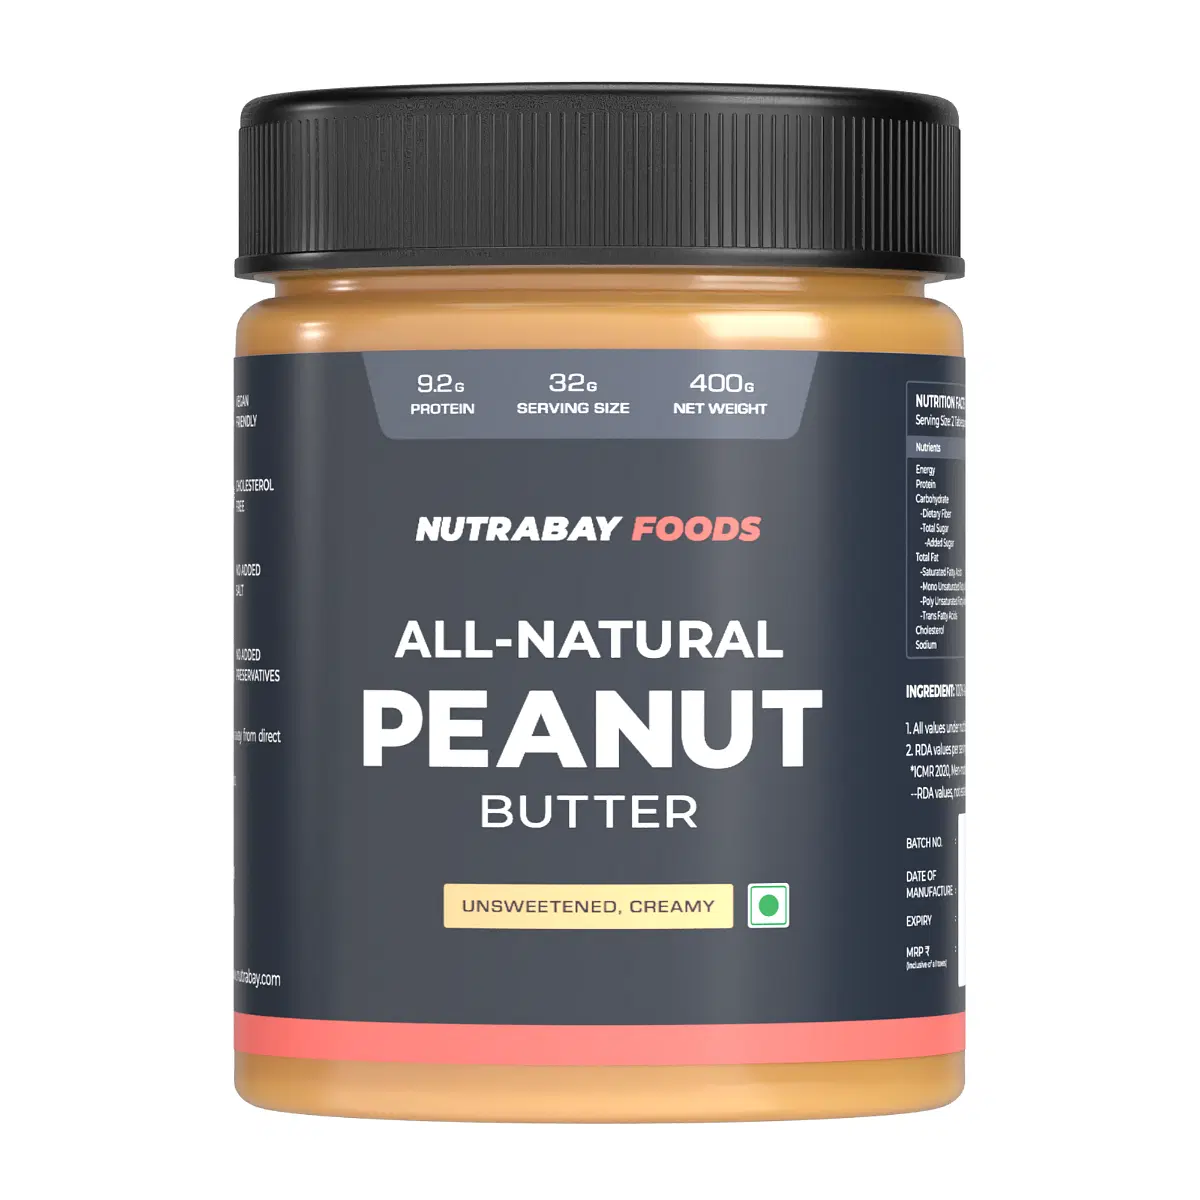 Nutrabay Foods All-Natural Peanut Butter